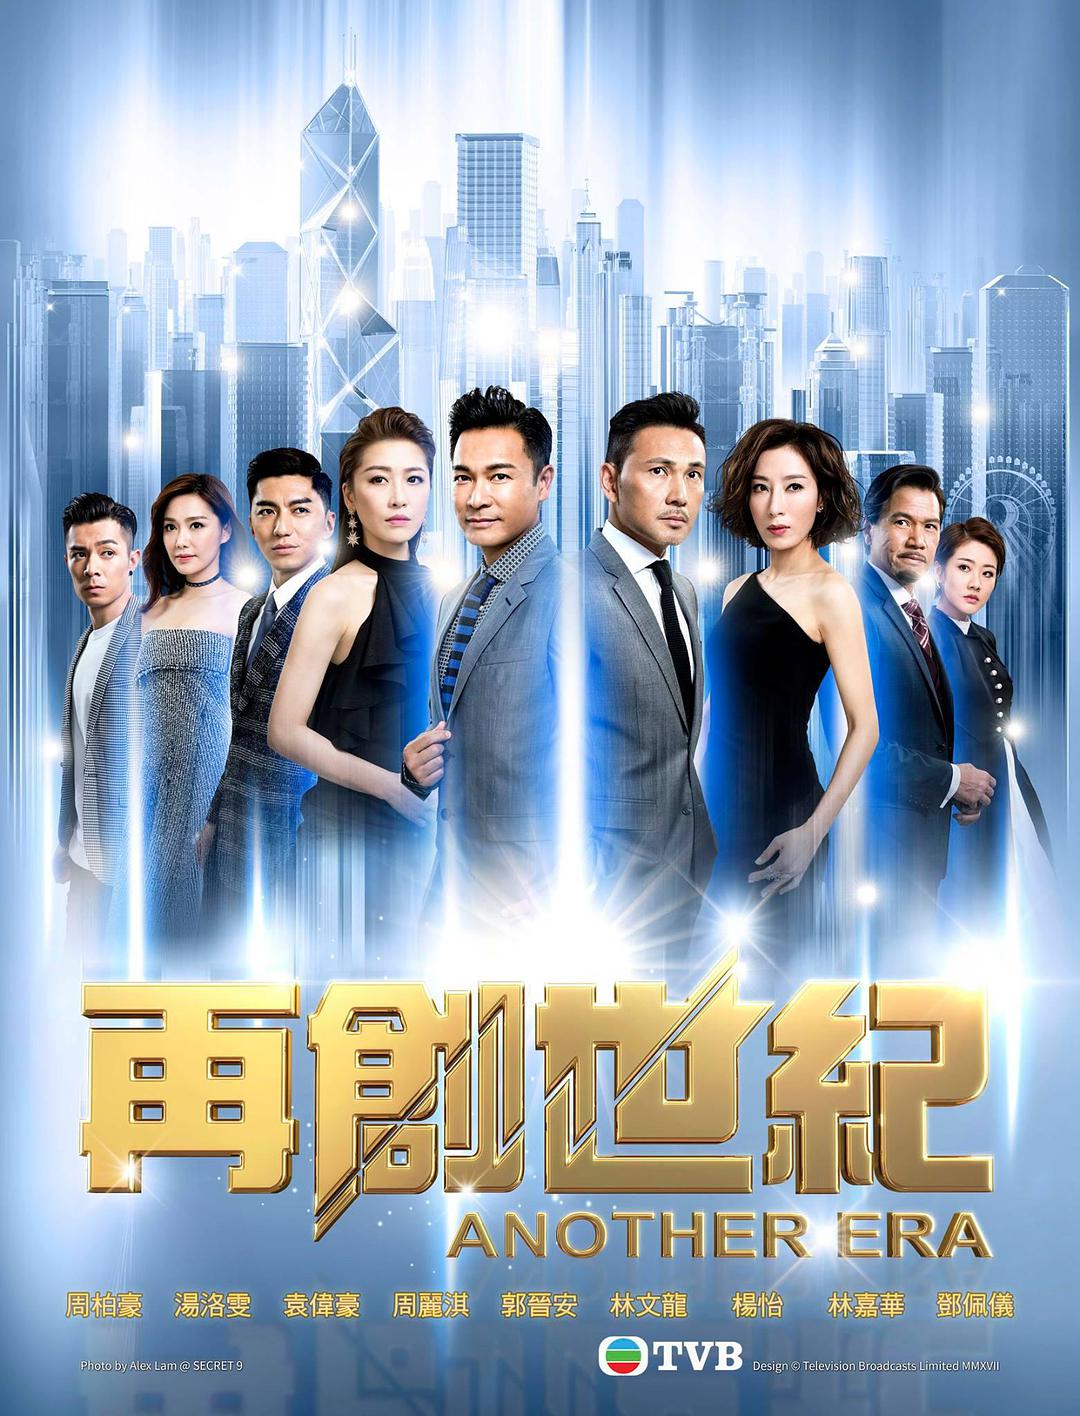 HK TV Drama, TVB Drama Online, Another Era